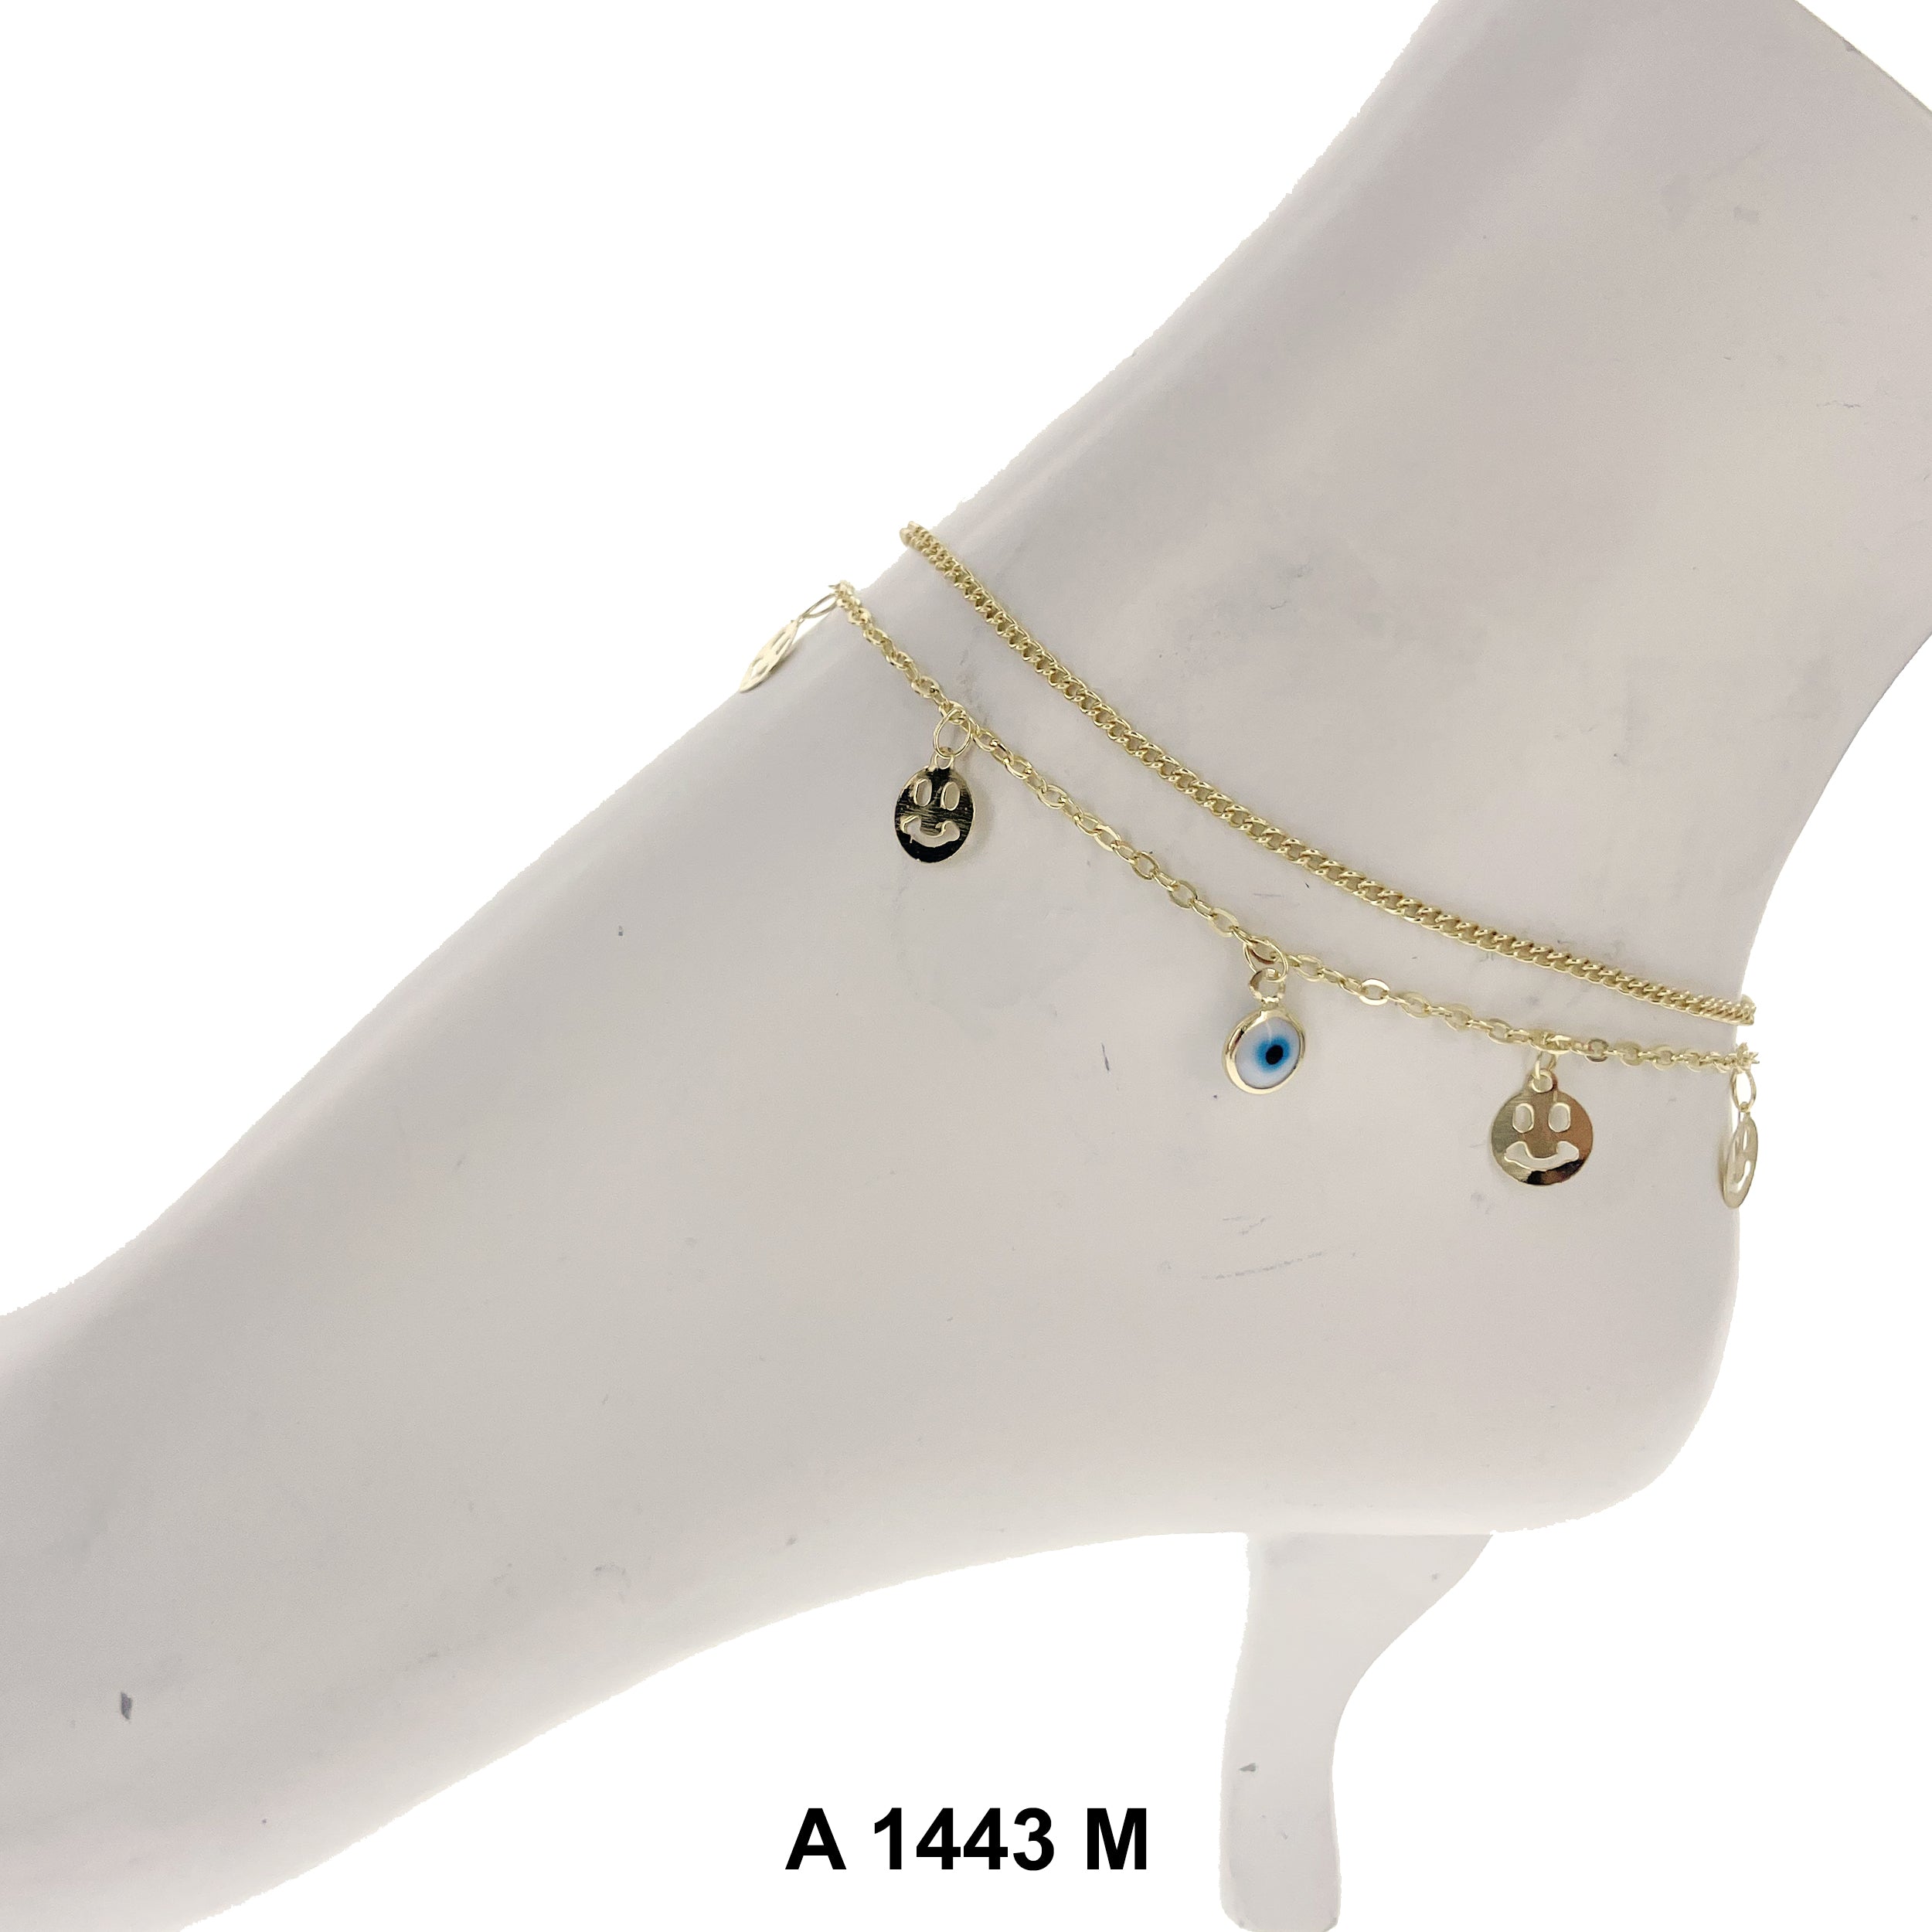 Fashion Anklets A 1443 M